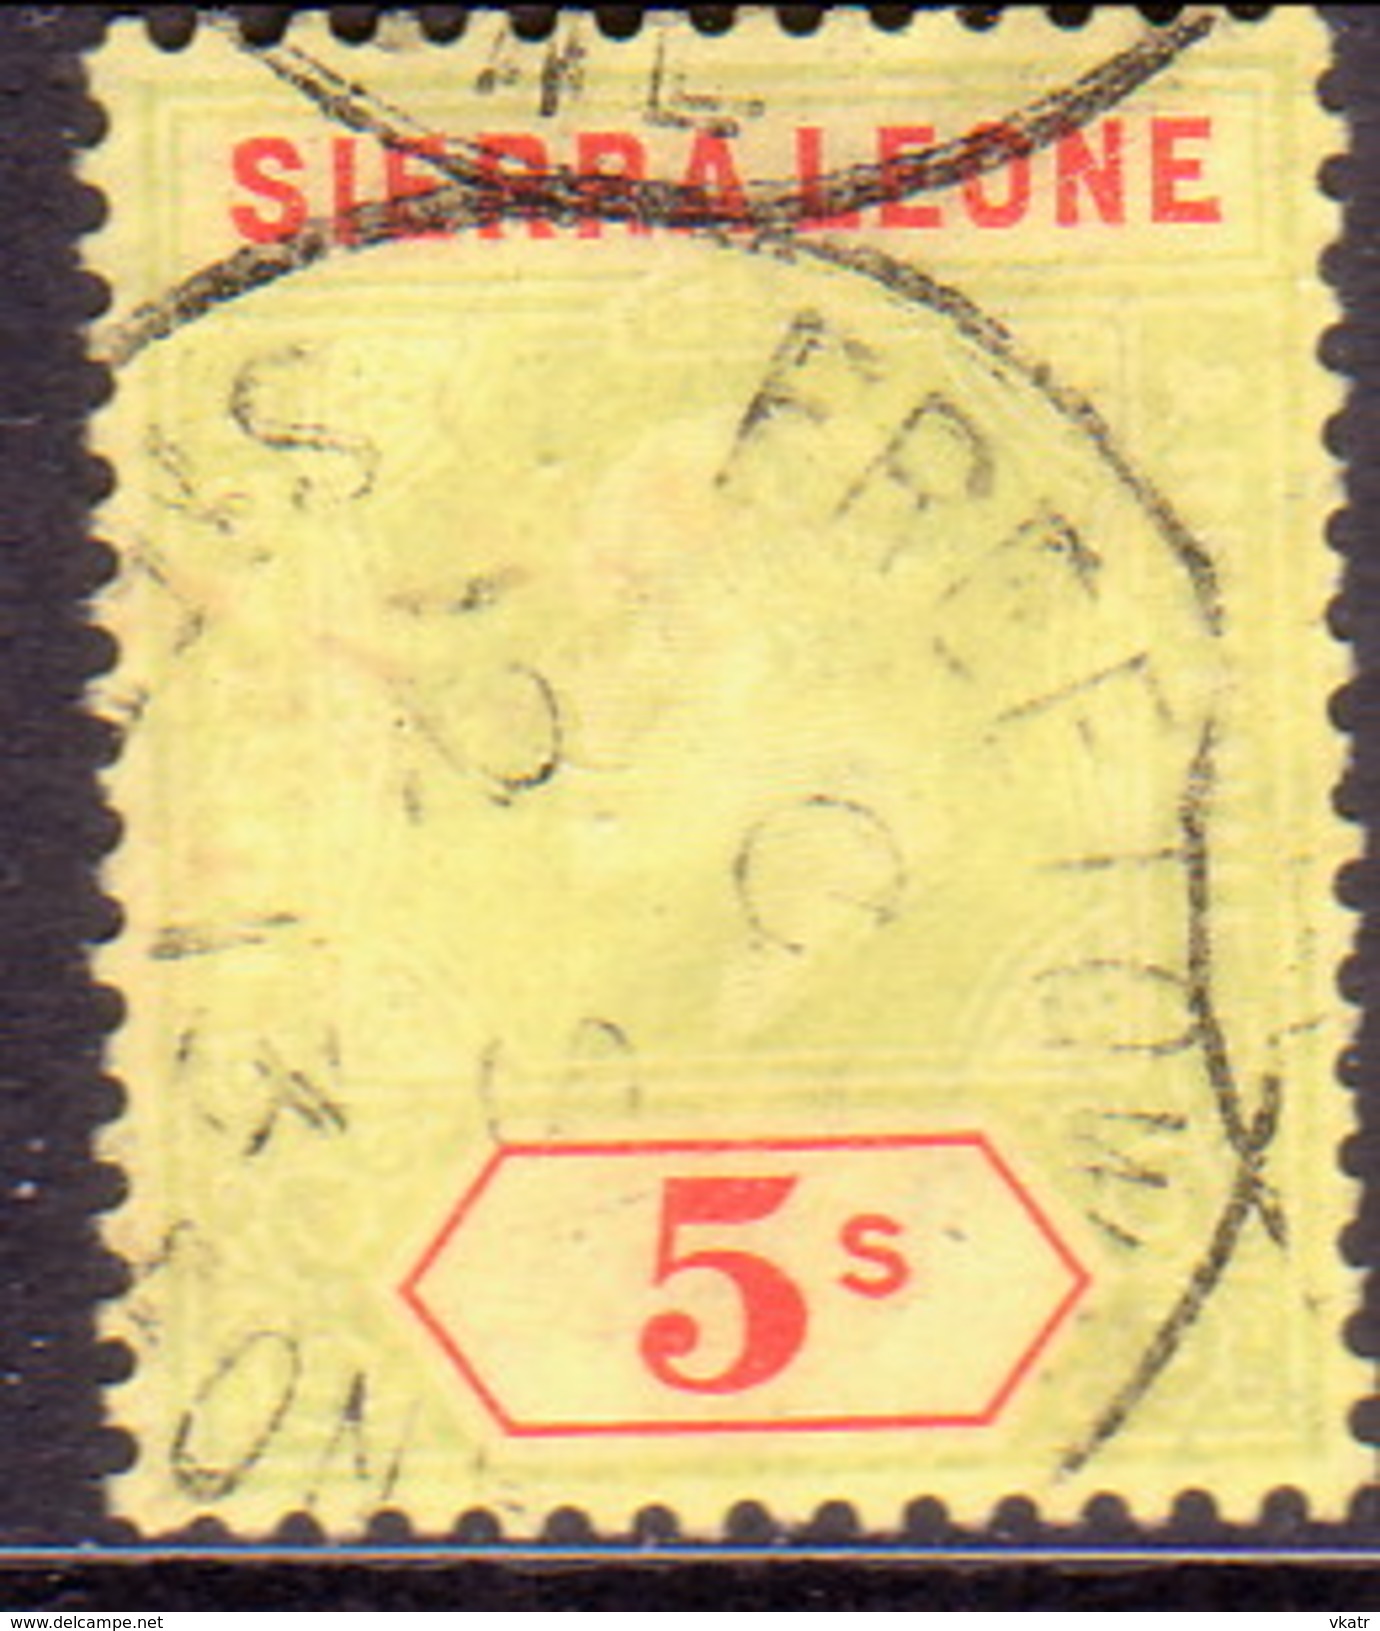 SIERRA LEONE 1908 SG #110 5sh Used Green And Red/yellow Wmk Mult.Crown CA CV £70 - Sierra Leone (...-1960)